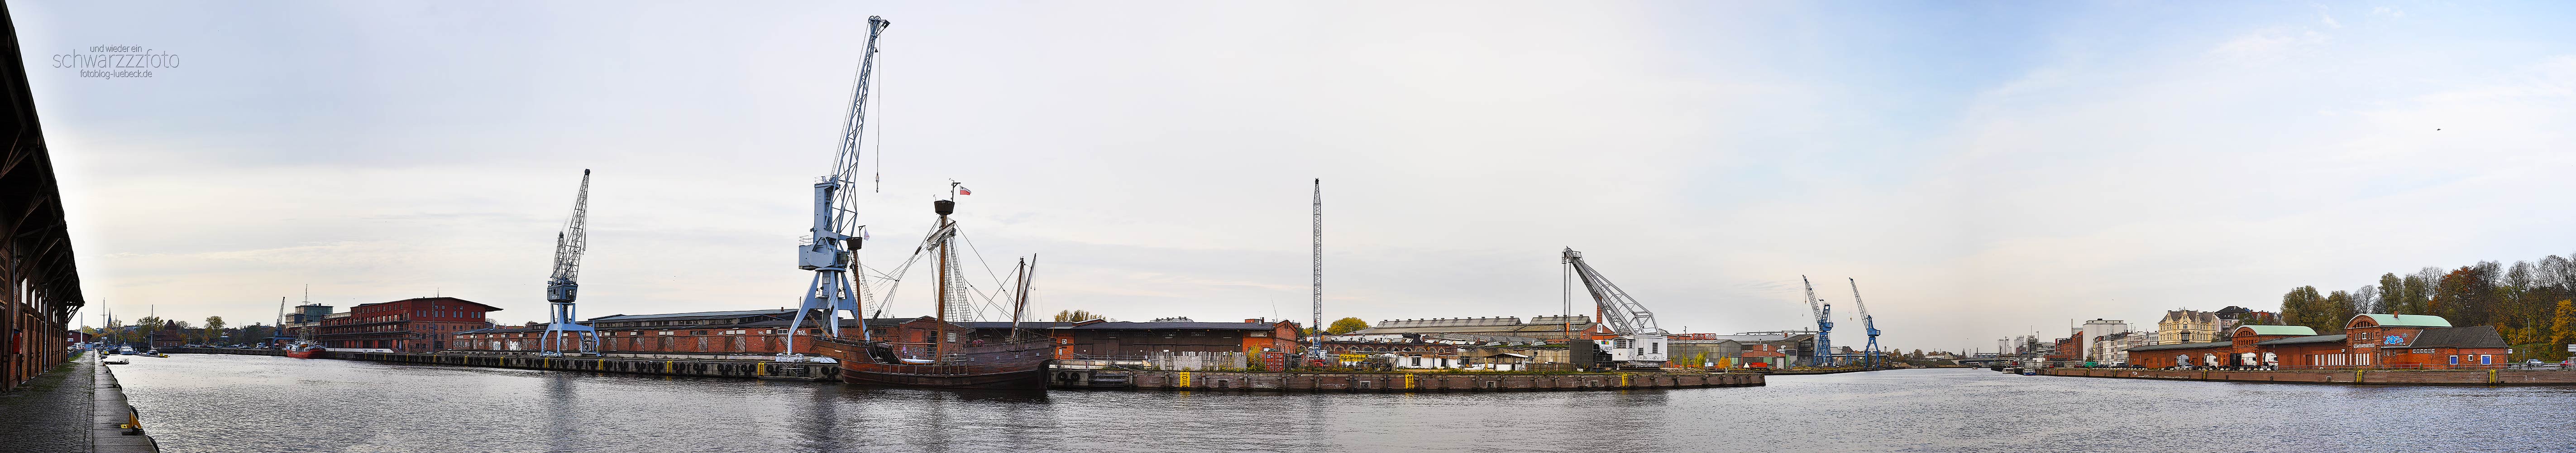 Hafen-Panorama-01-2010